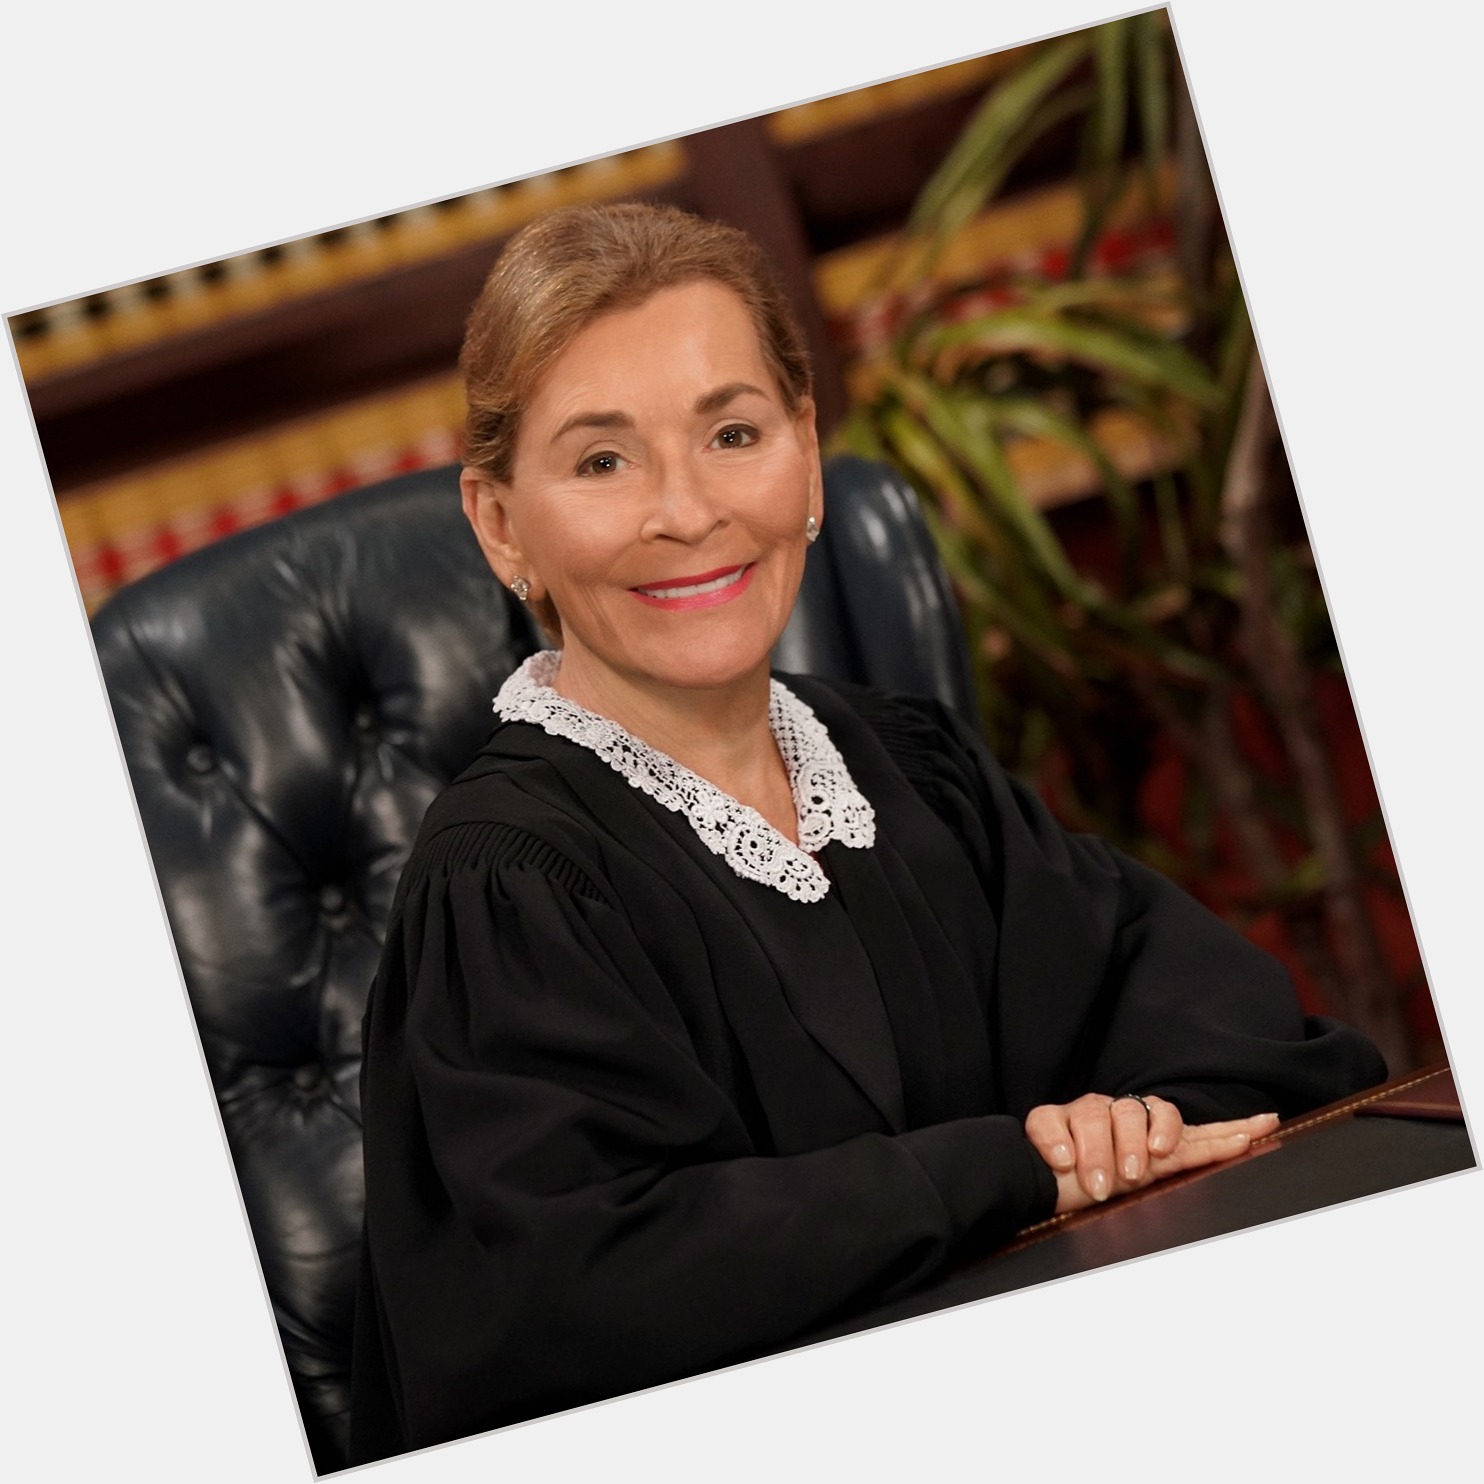 HAPPY BIRTHDAY TO JUDGE JUDY!  Judge Judy Sheindlin celebrates her 78th today. 